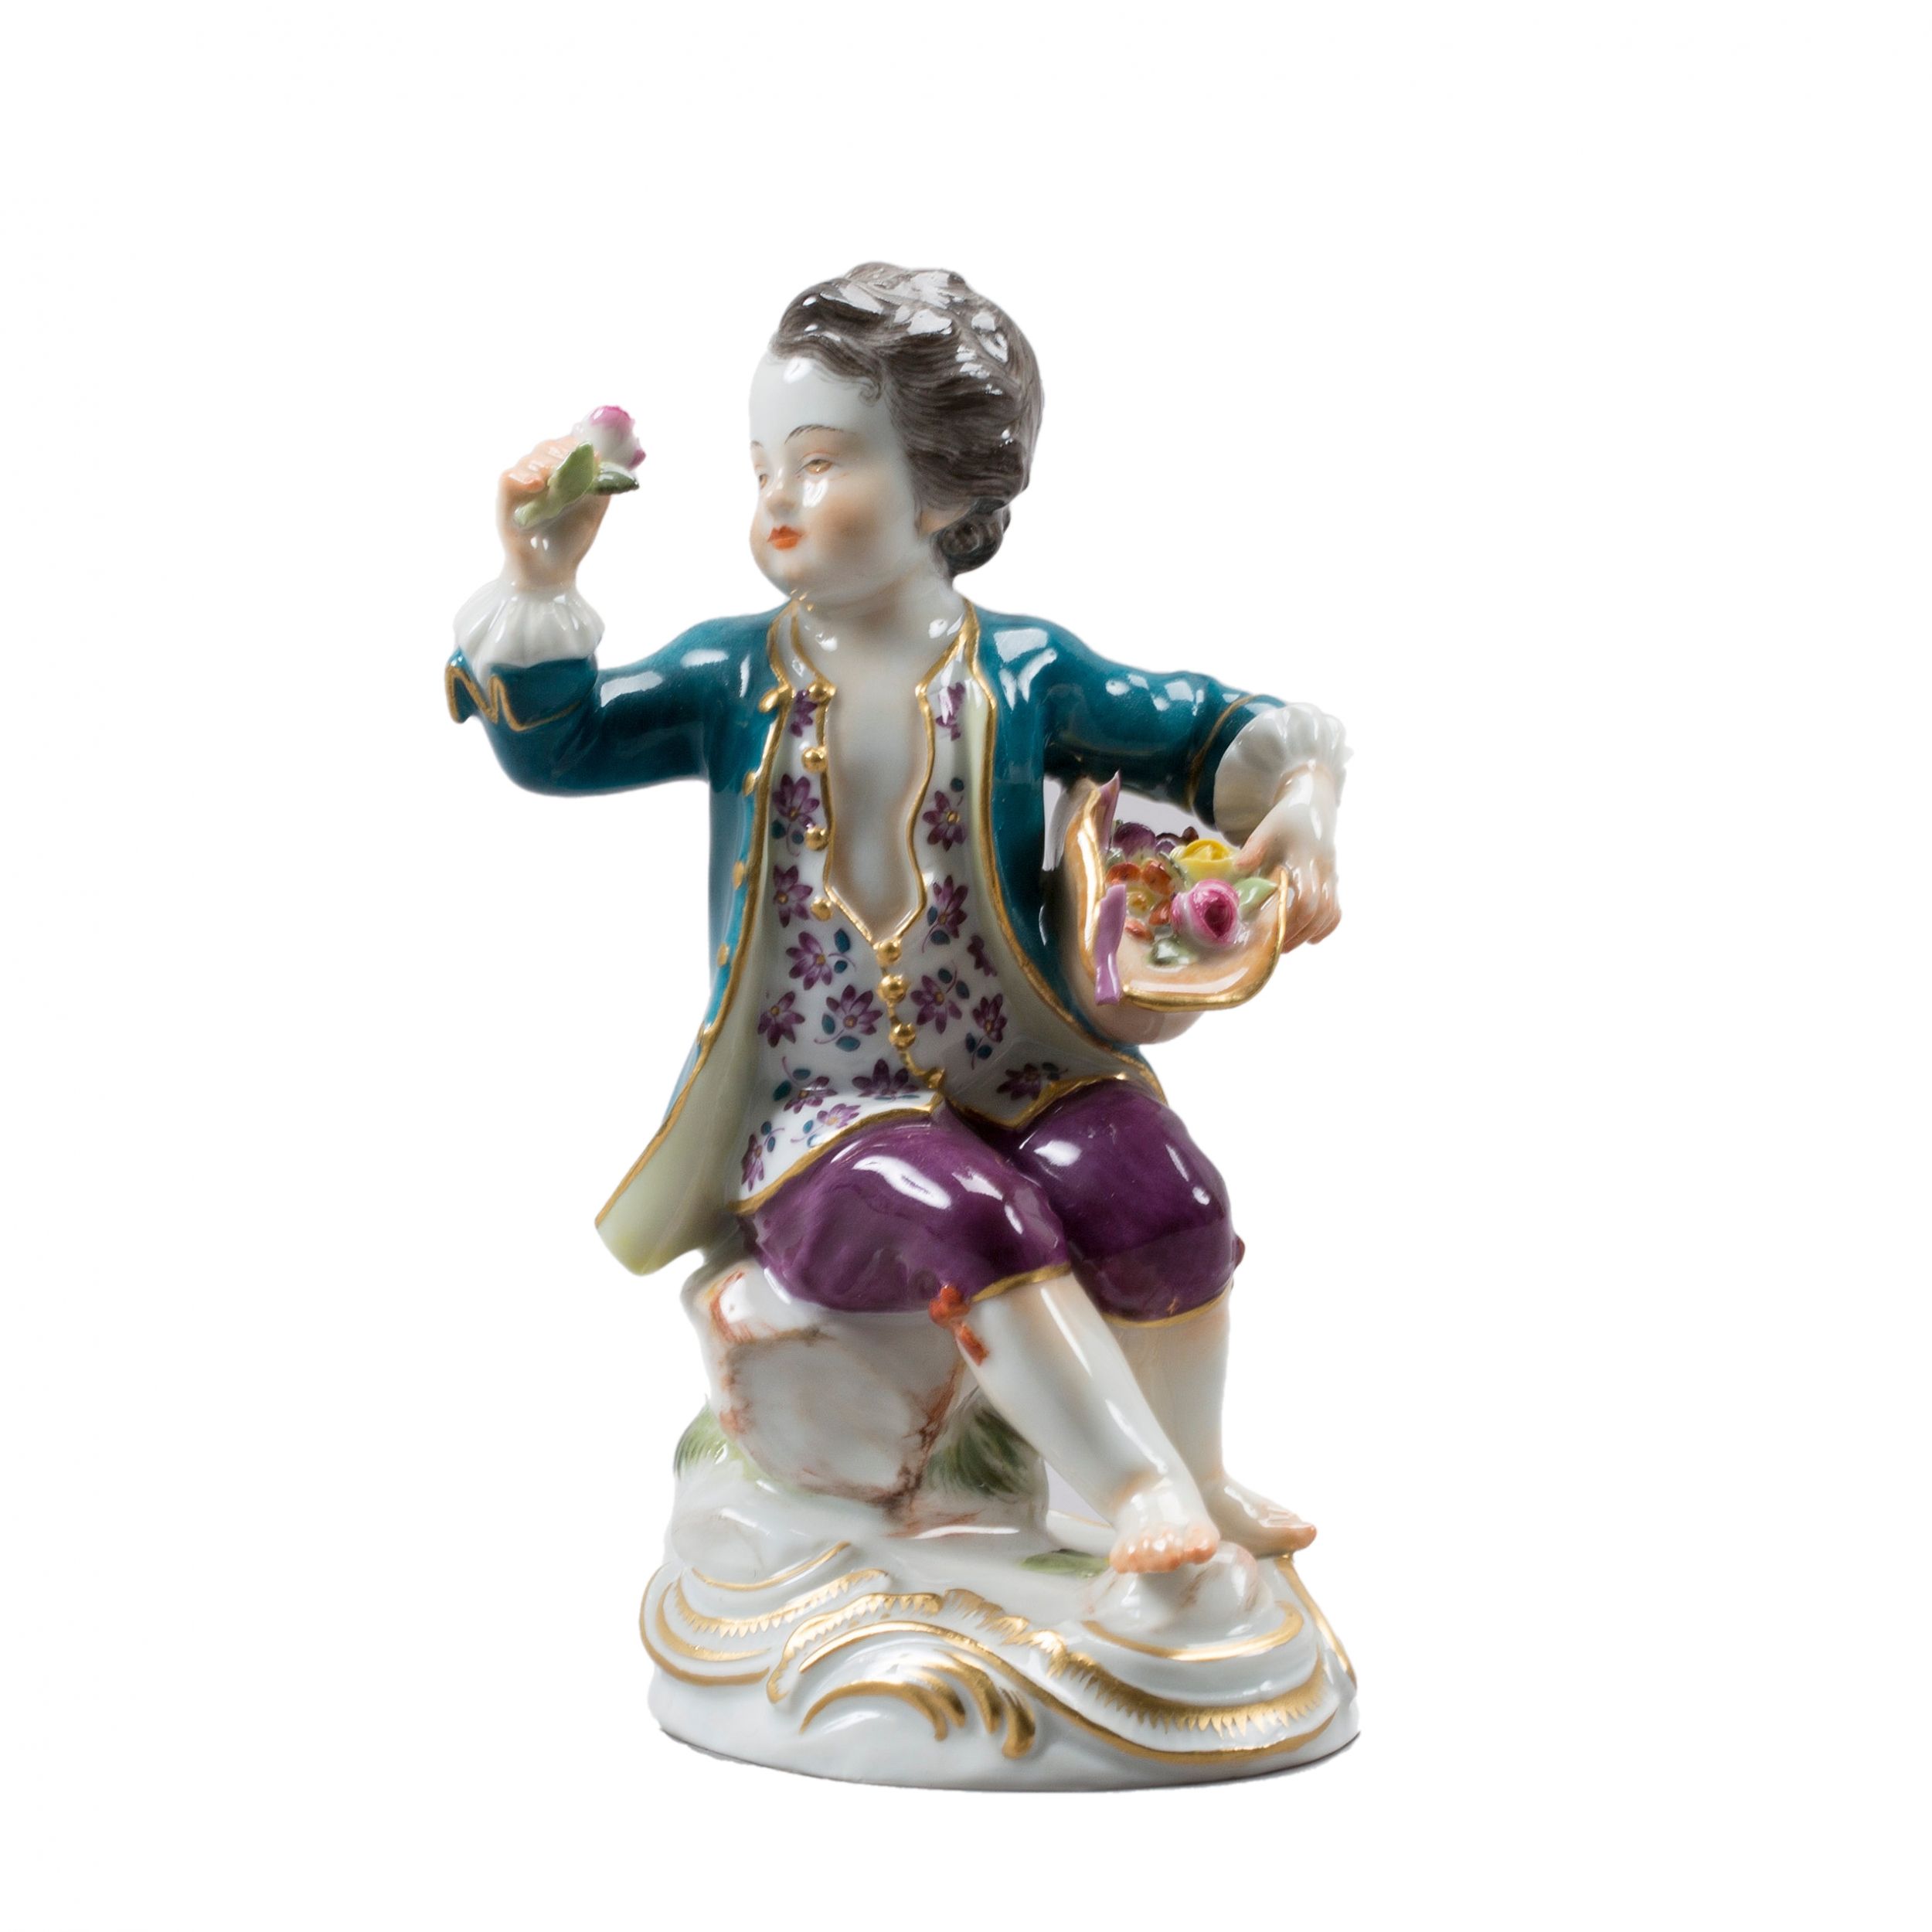 Porcelain-figurine-Boy-with-flowers-Meissen